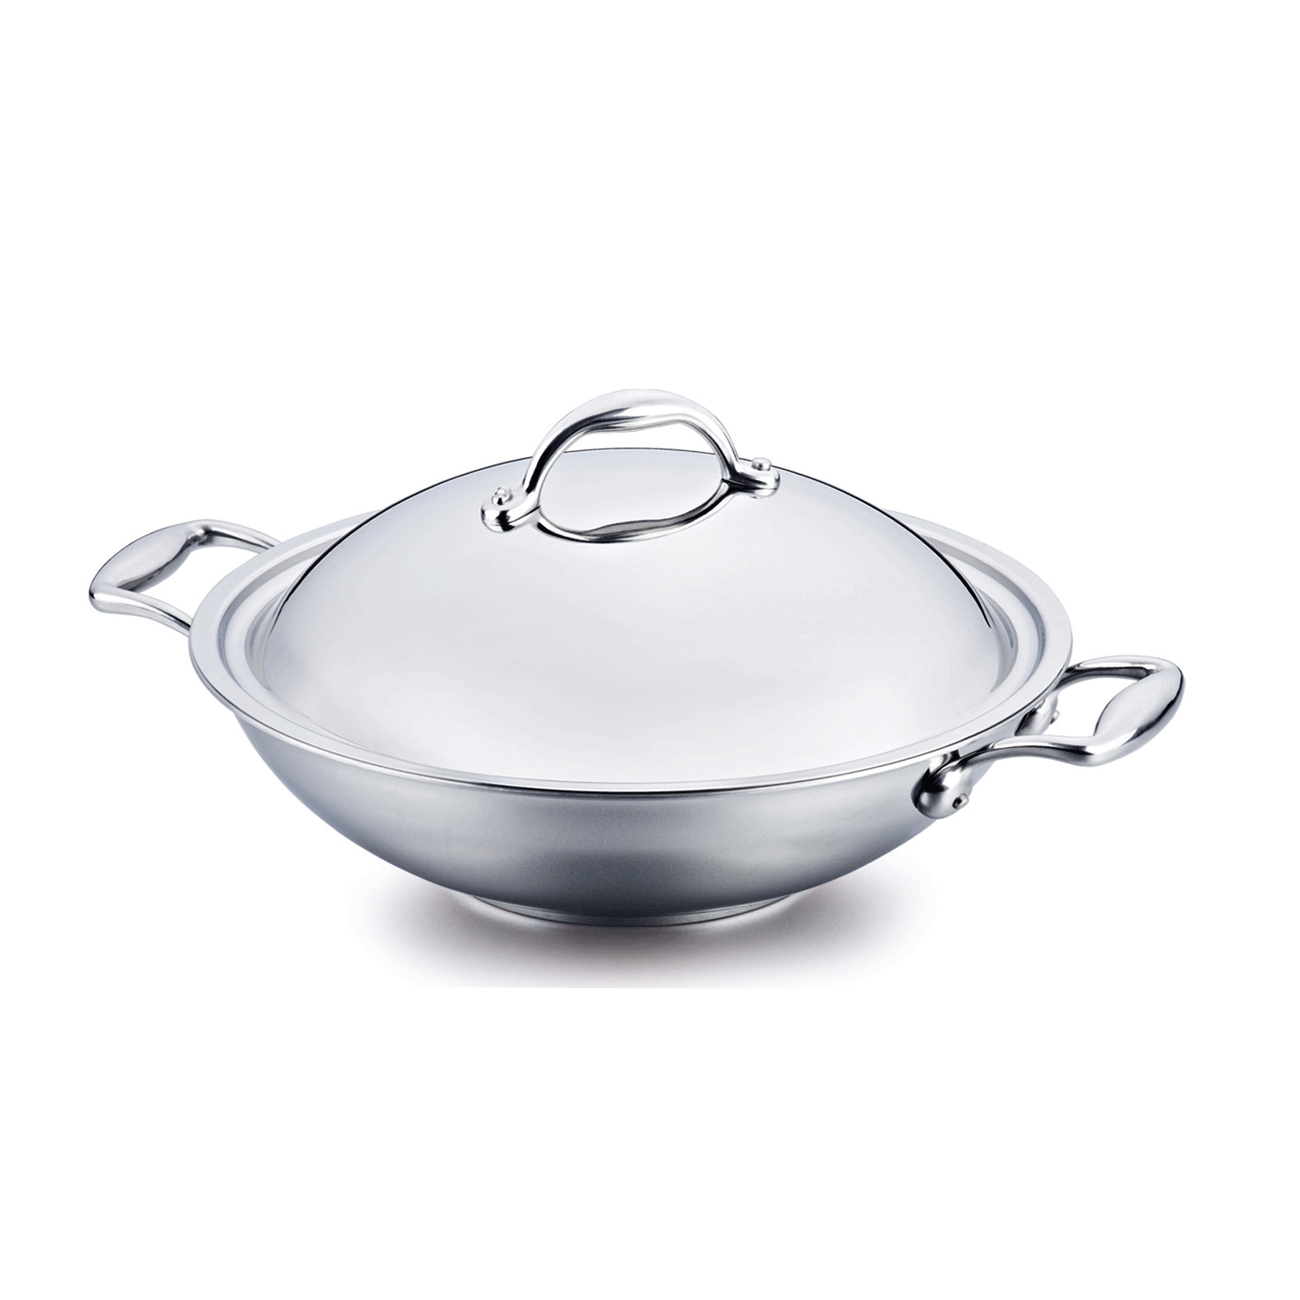 Enjoy binaural wok